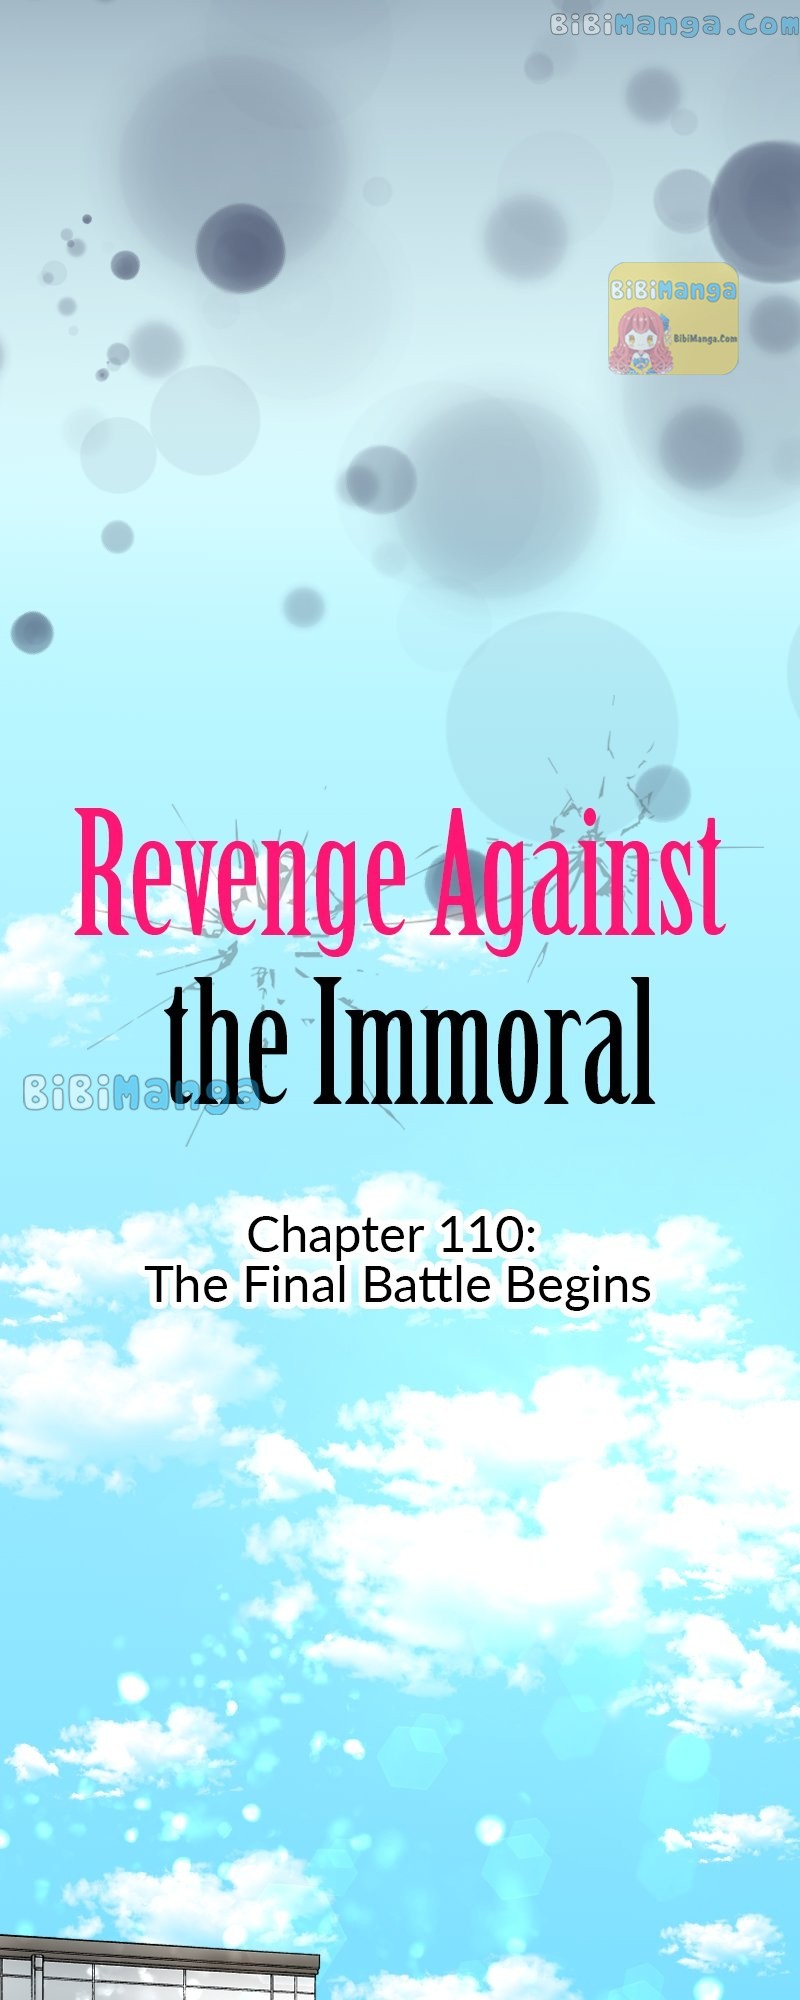 Revenge Against the Immoral chapter 110